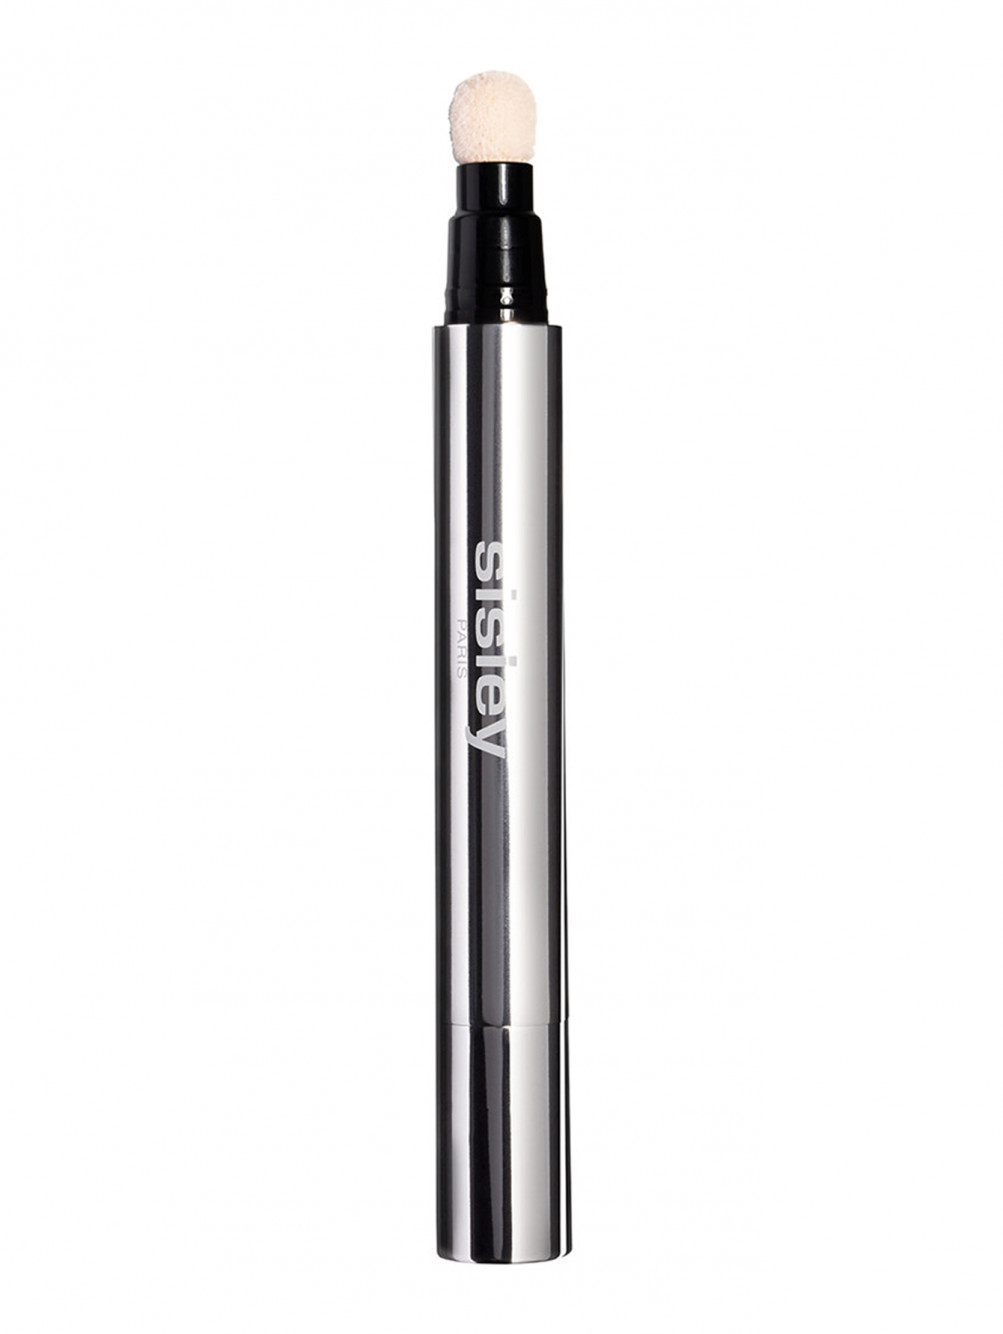 Хайлайтер-карандаш № 5 Бежевый, Makeup - Общий вид